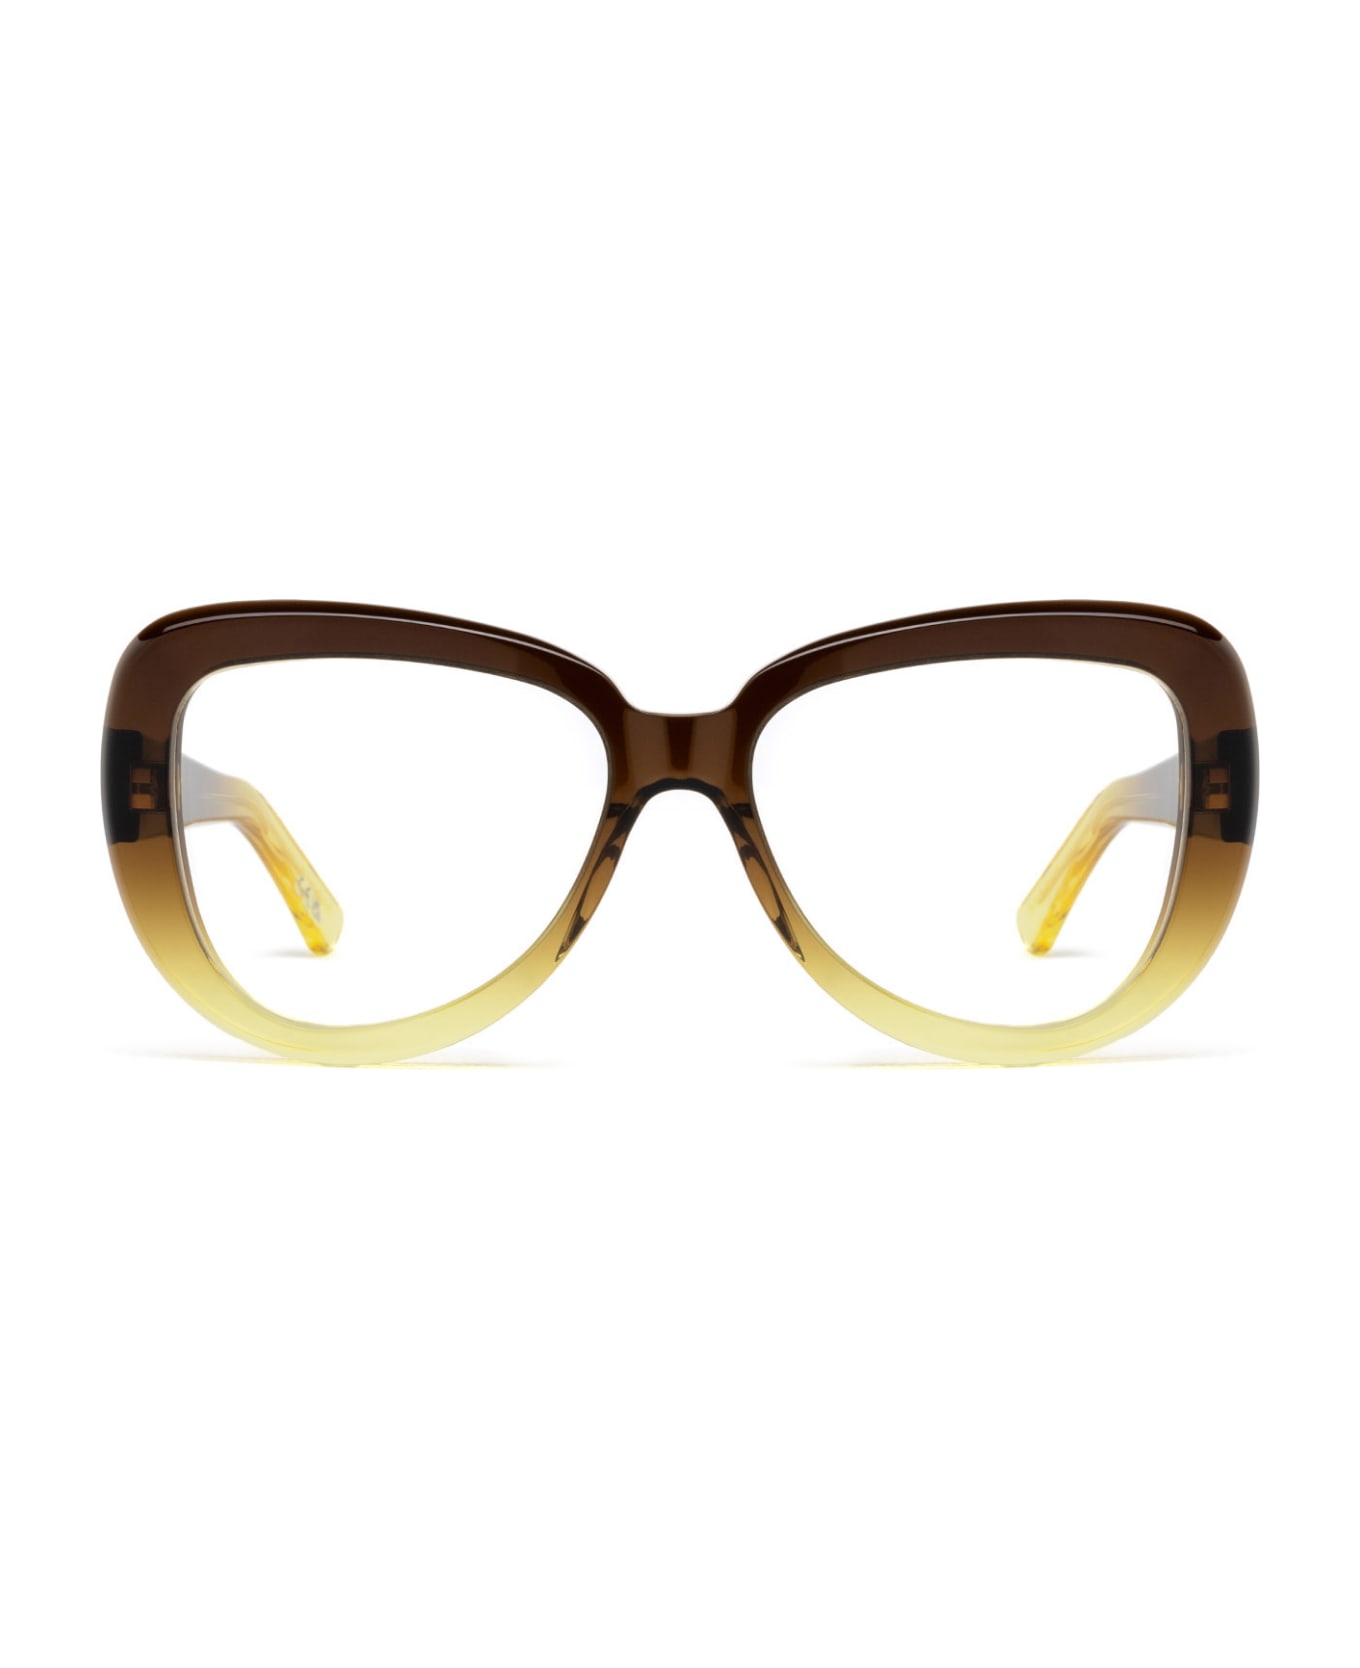 Marni Eyewear Elephant Island Opt Faded Mellow Glasses - Faded Mellow